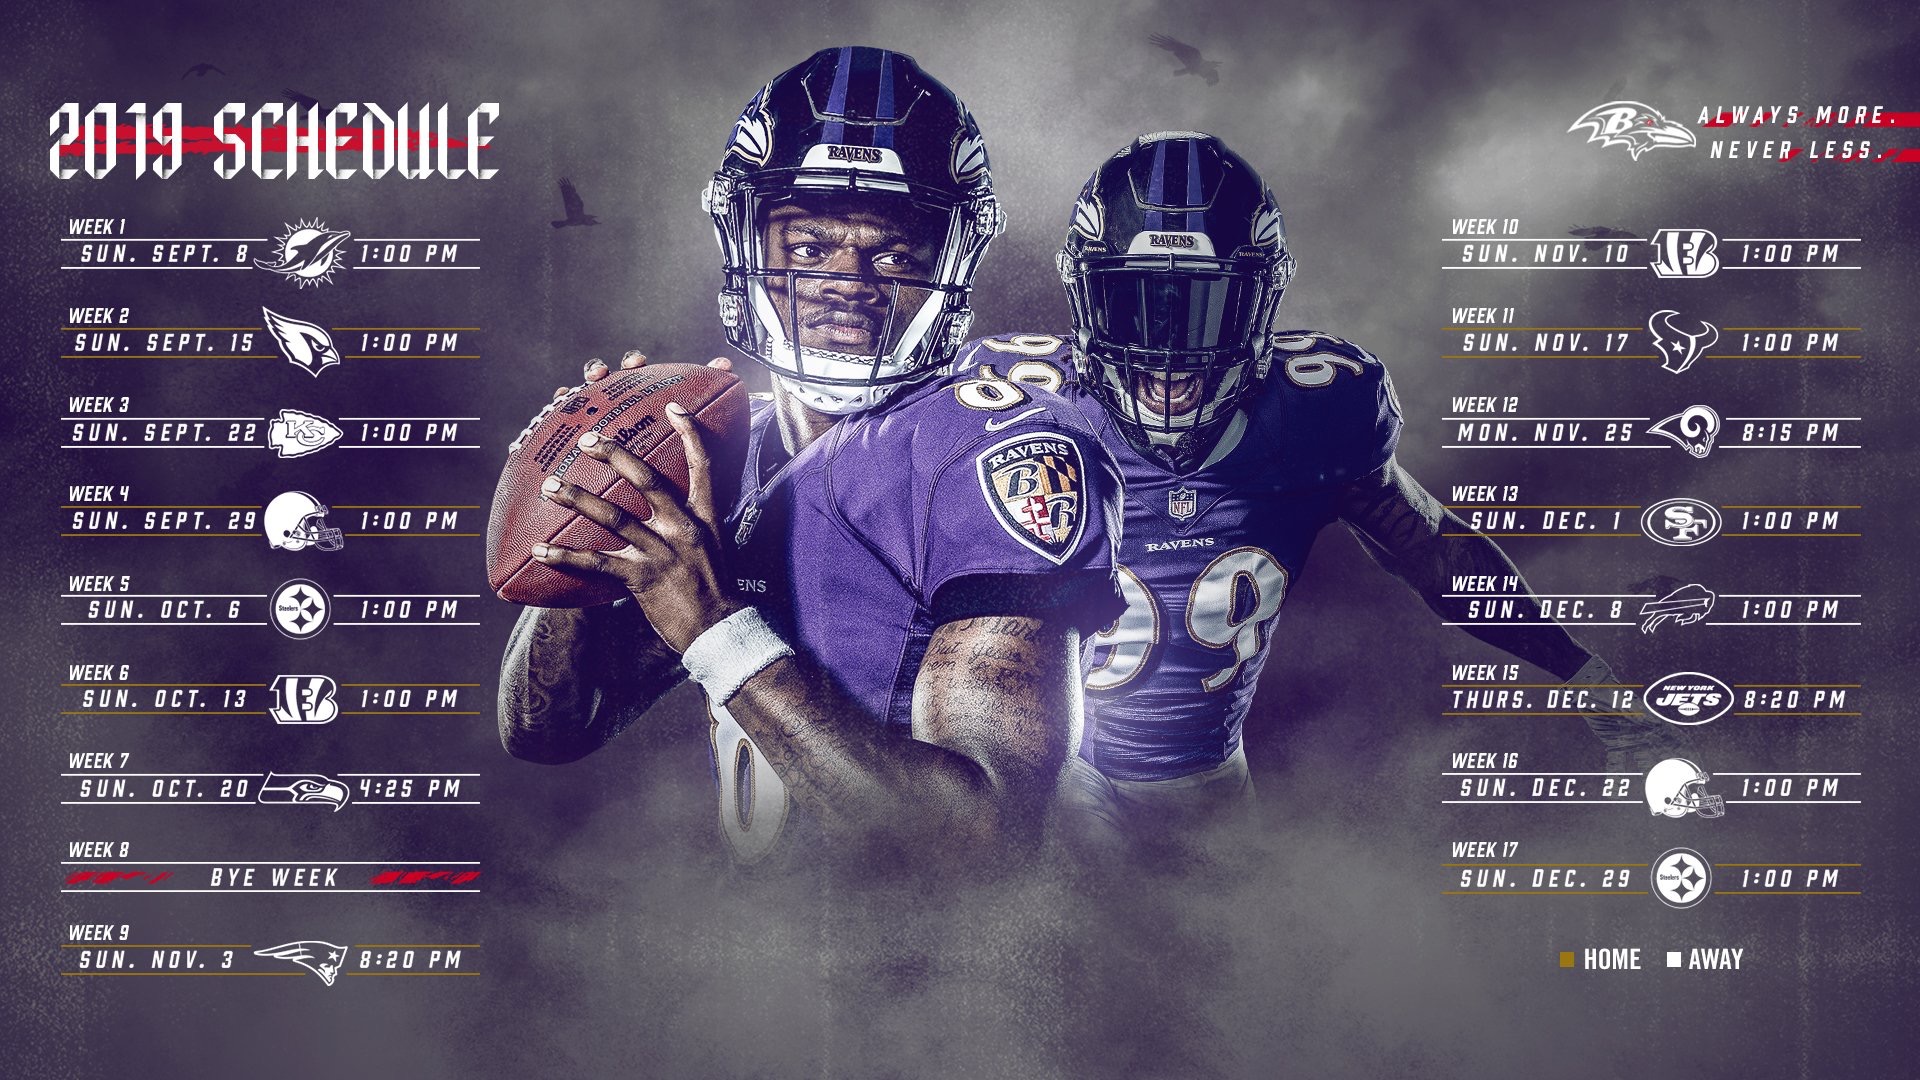 2019-2020 Baltimore Ravens NFL regular season schedule - Marylandsportsblog.com